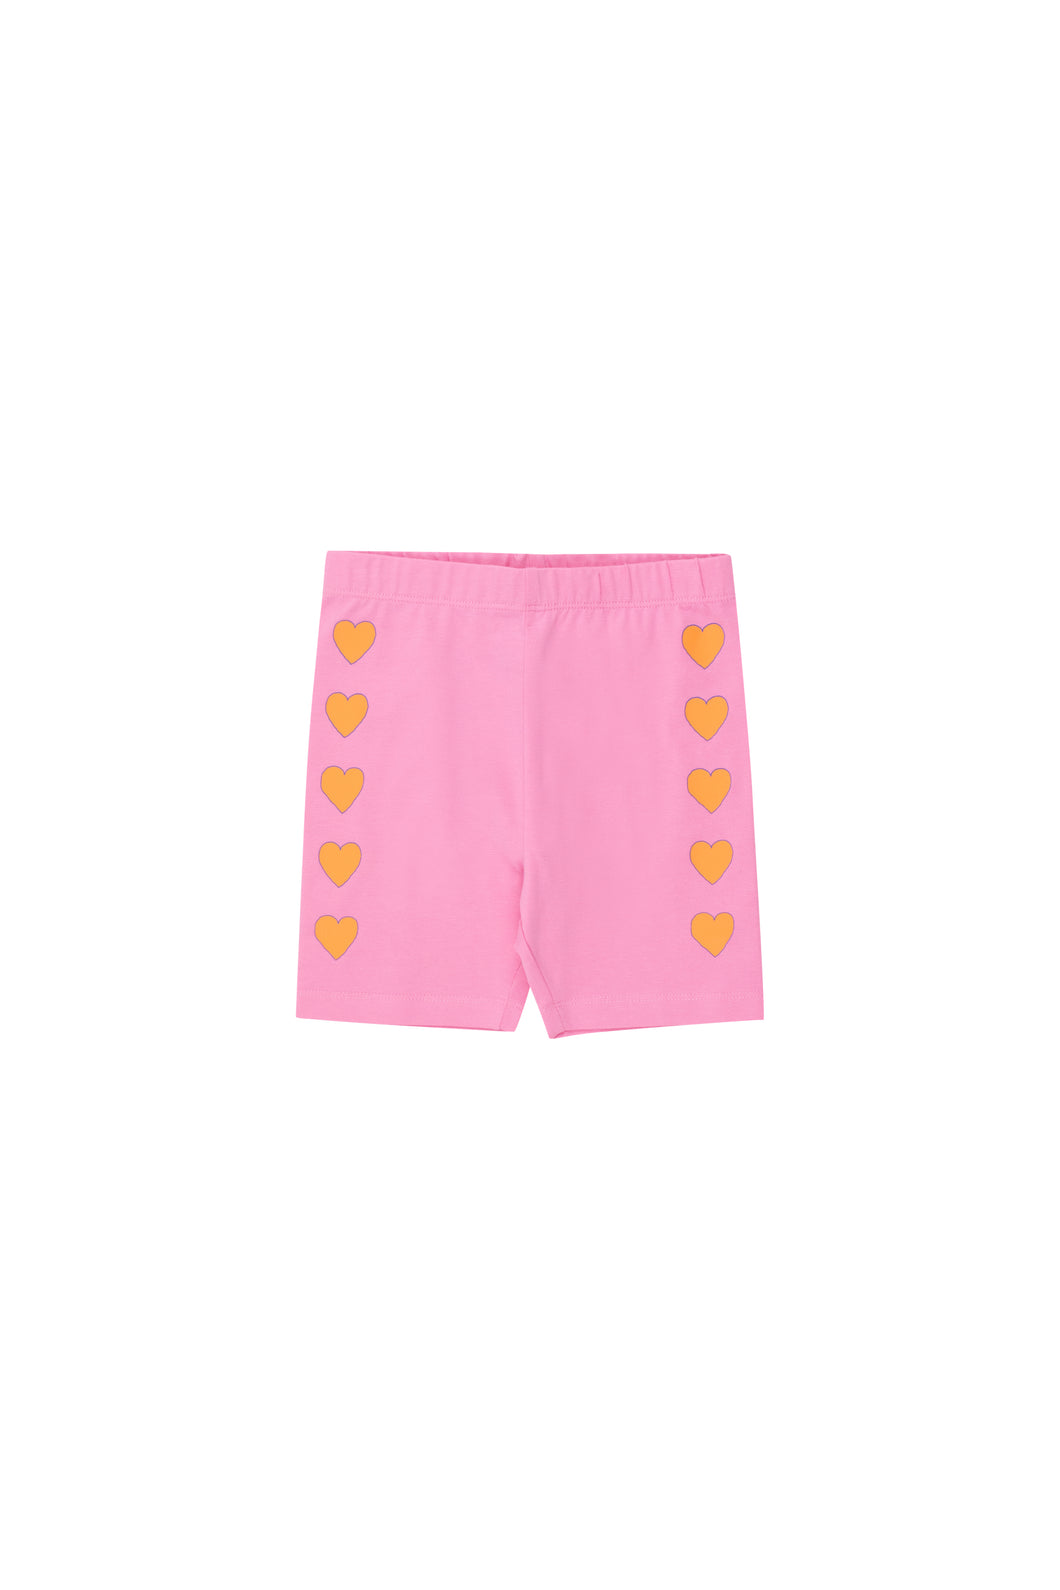 Tinycottons / KID / Hearts Biker Leggings / Pink